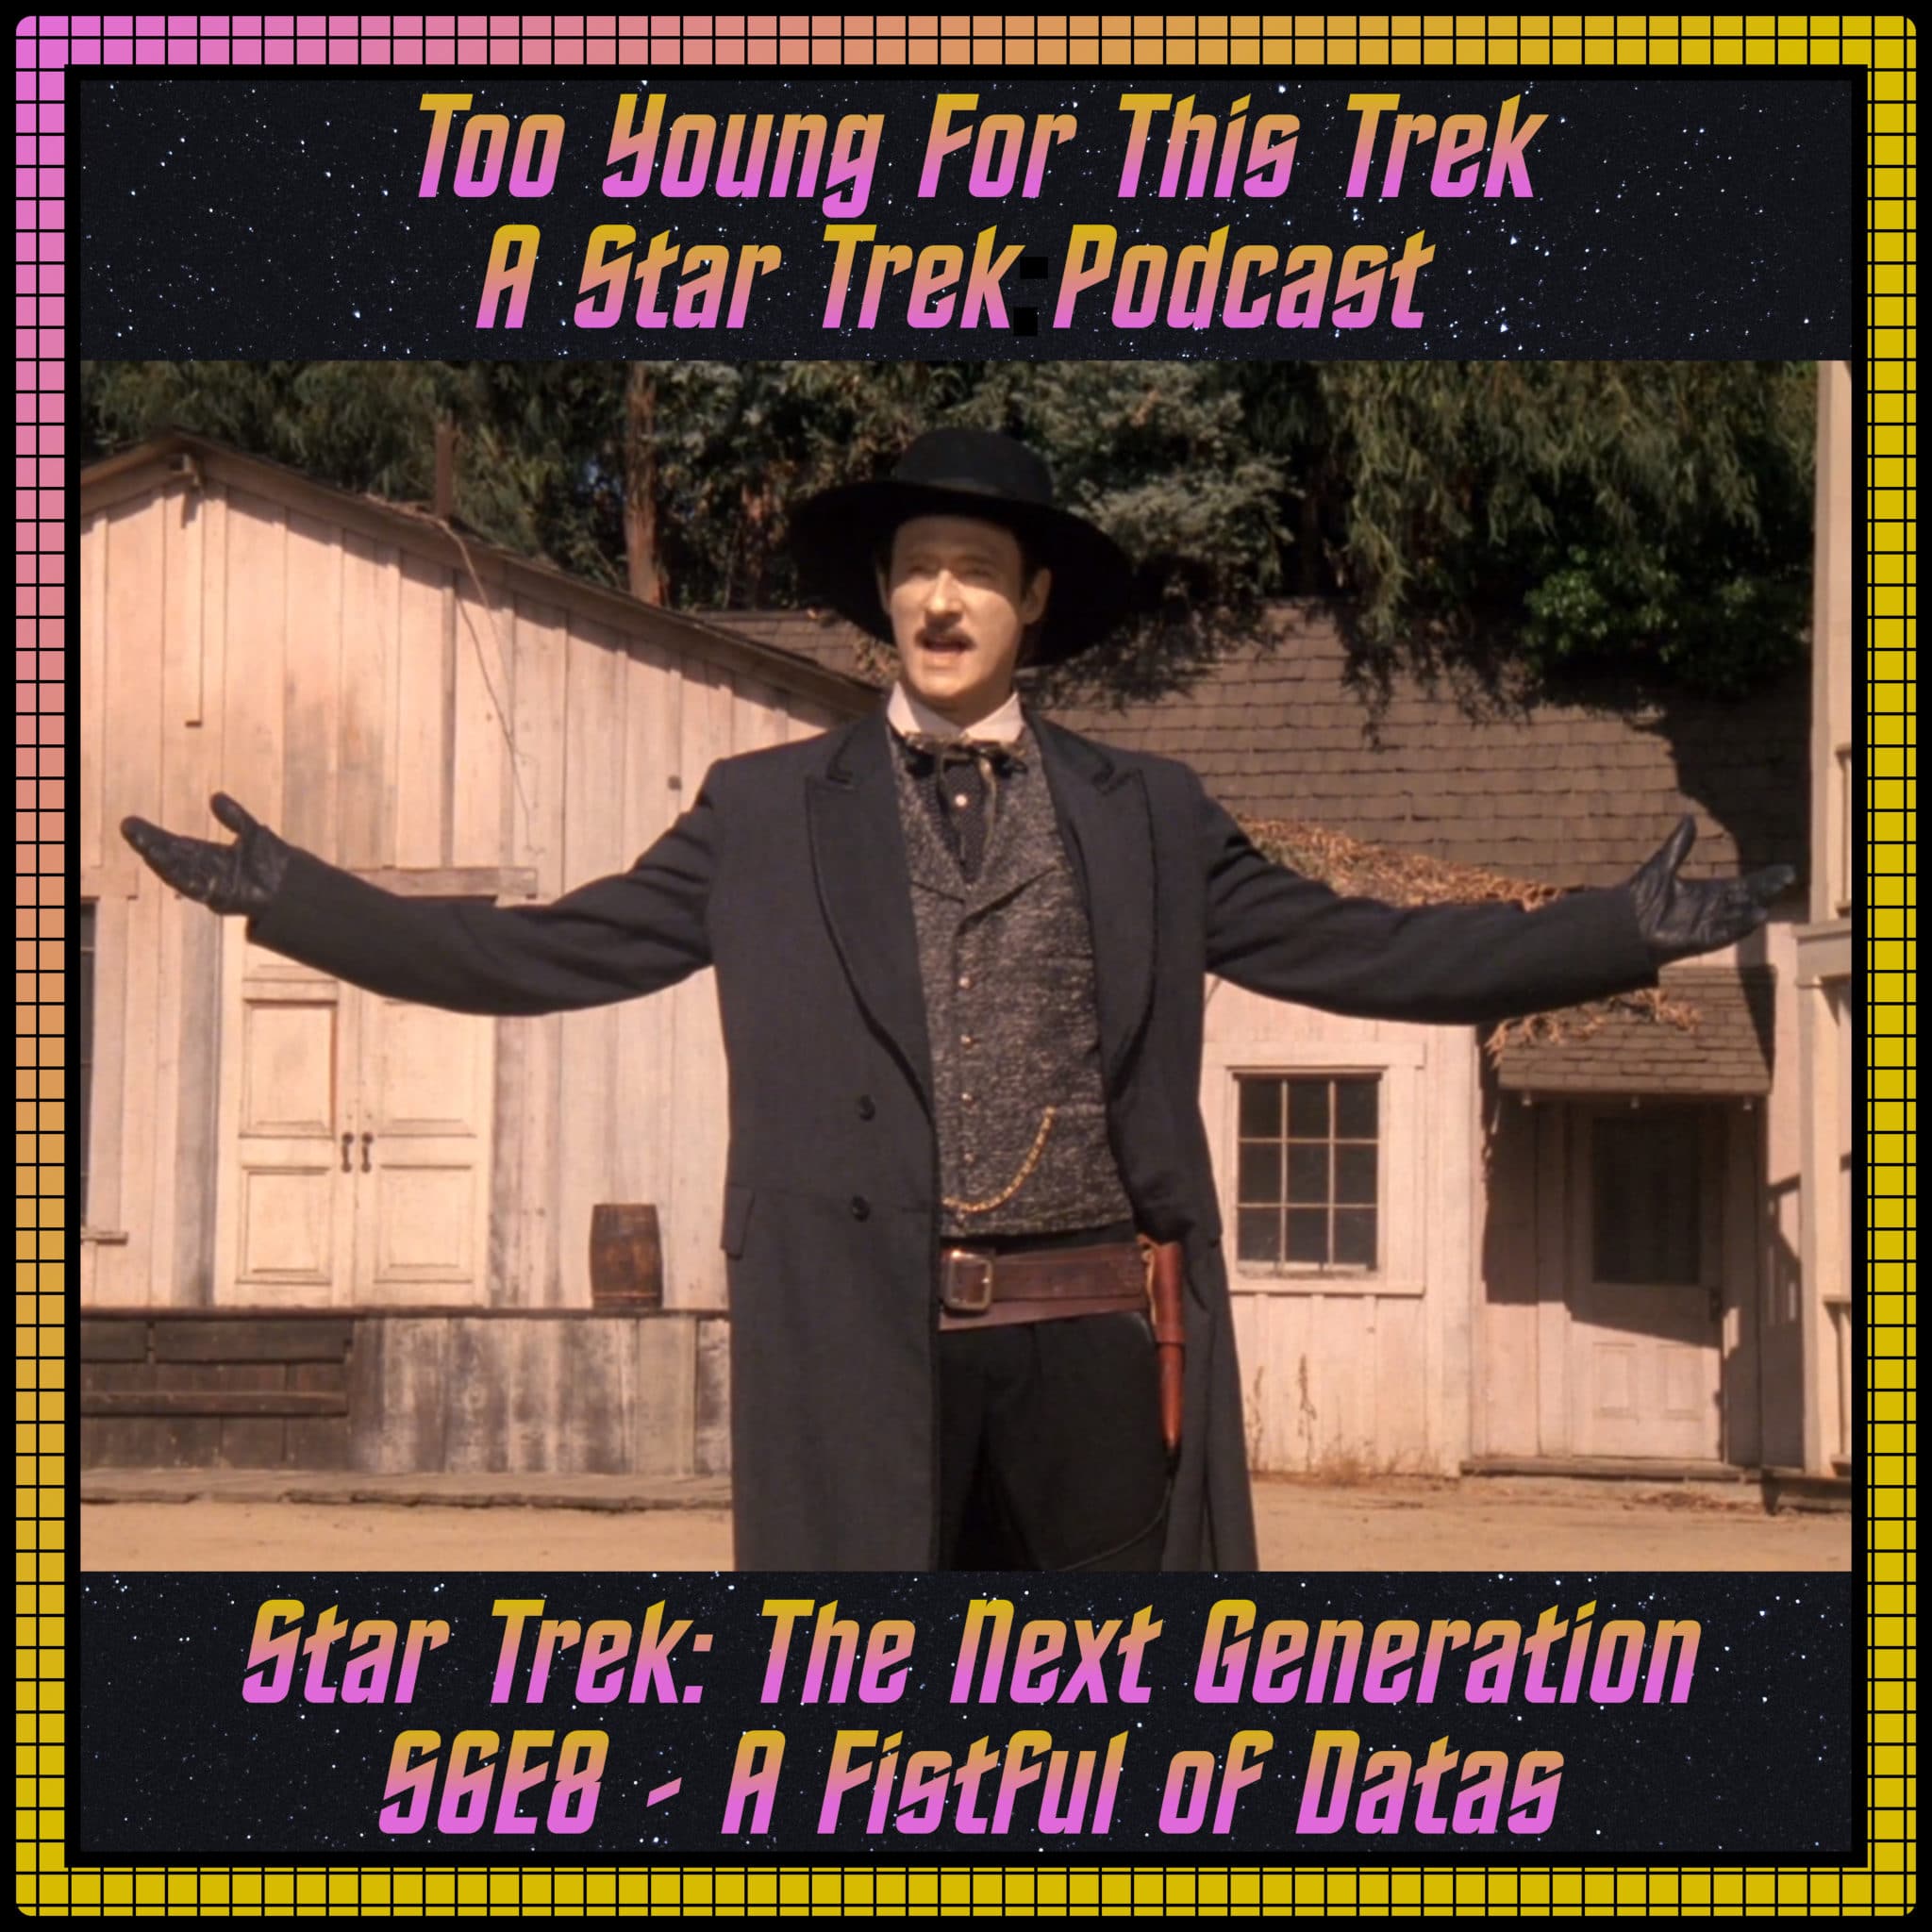 Star Trek: The Next Generation S6E8 - A Fistful of Datas